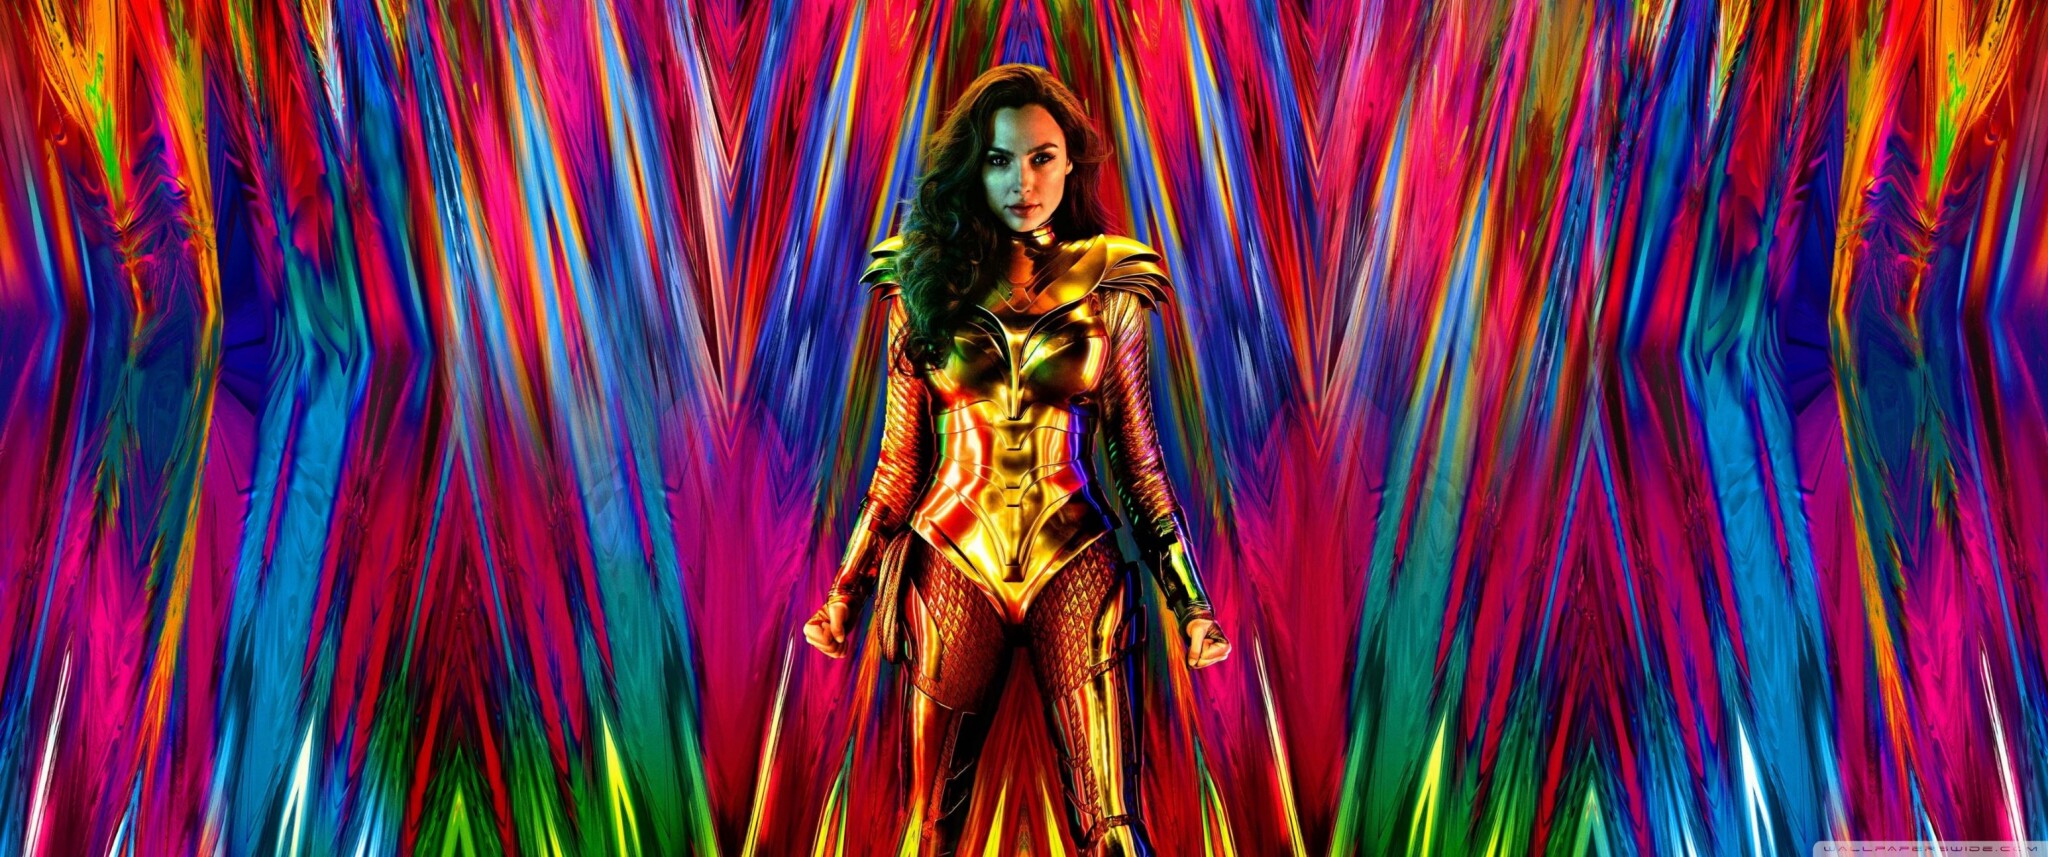 Filmový přelom. Wonder Woman 1984 půjde zároveň do kin i na HBO Max